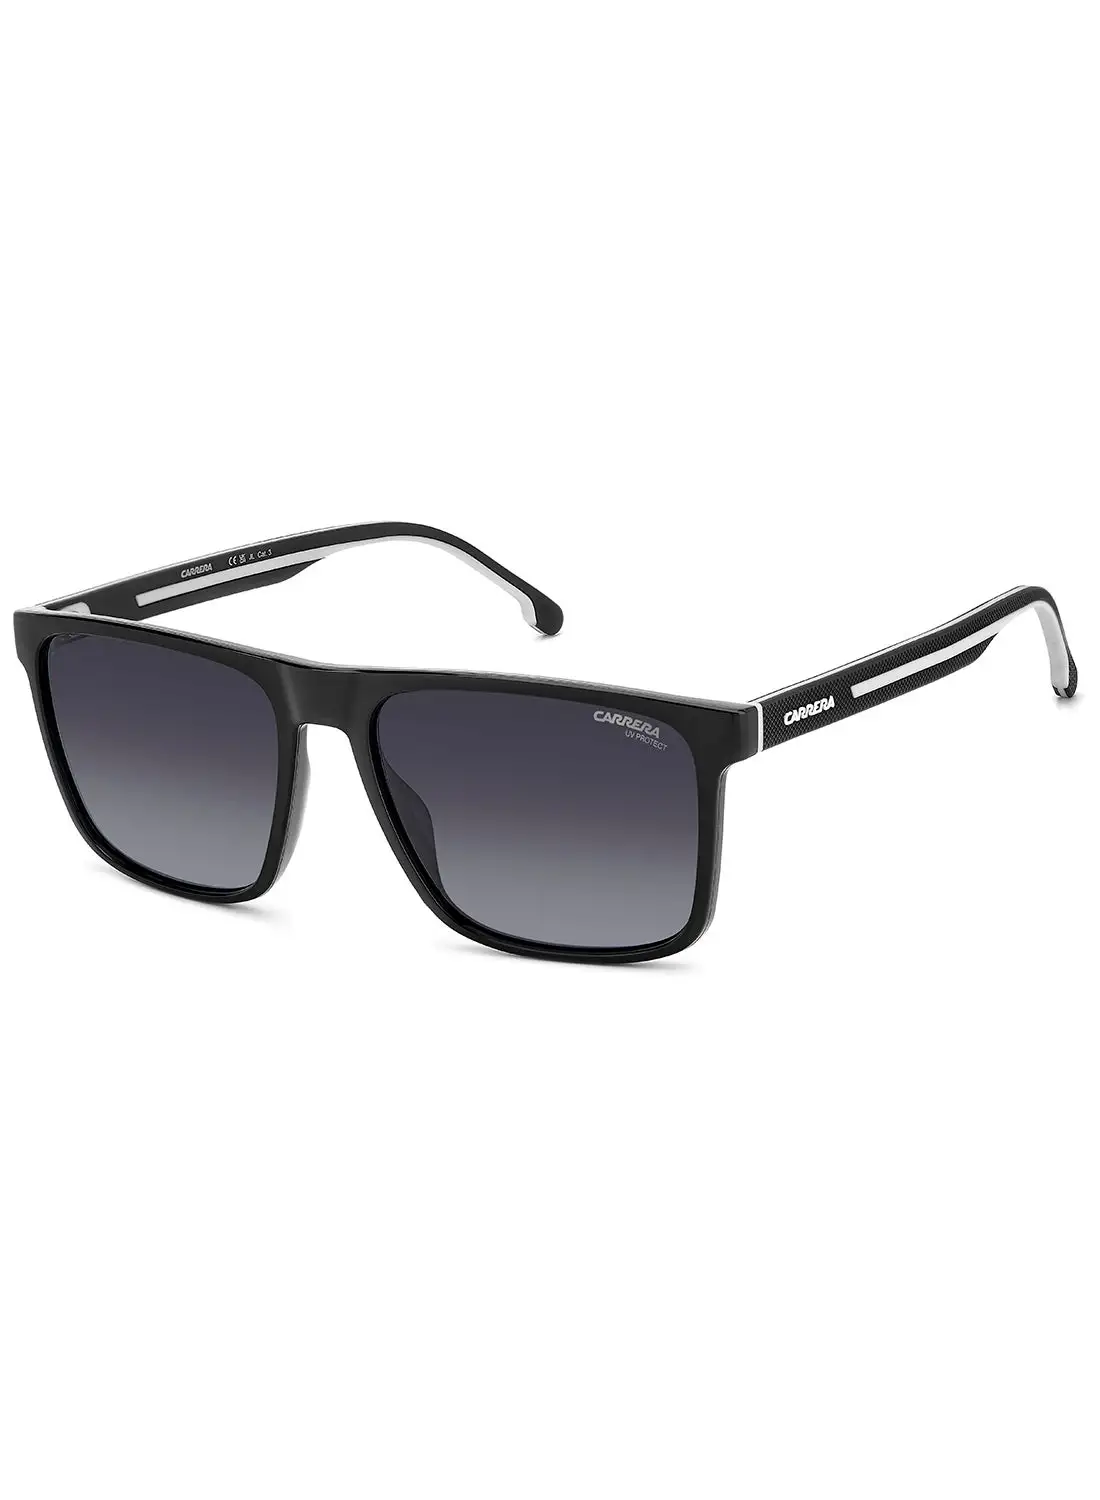 Carrera Men's UV Protection Rectangular Sunglasses - Carrera 8064/S Black Millimeter - Lens Size: 57 Mm